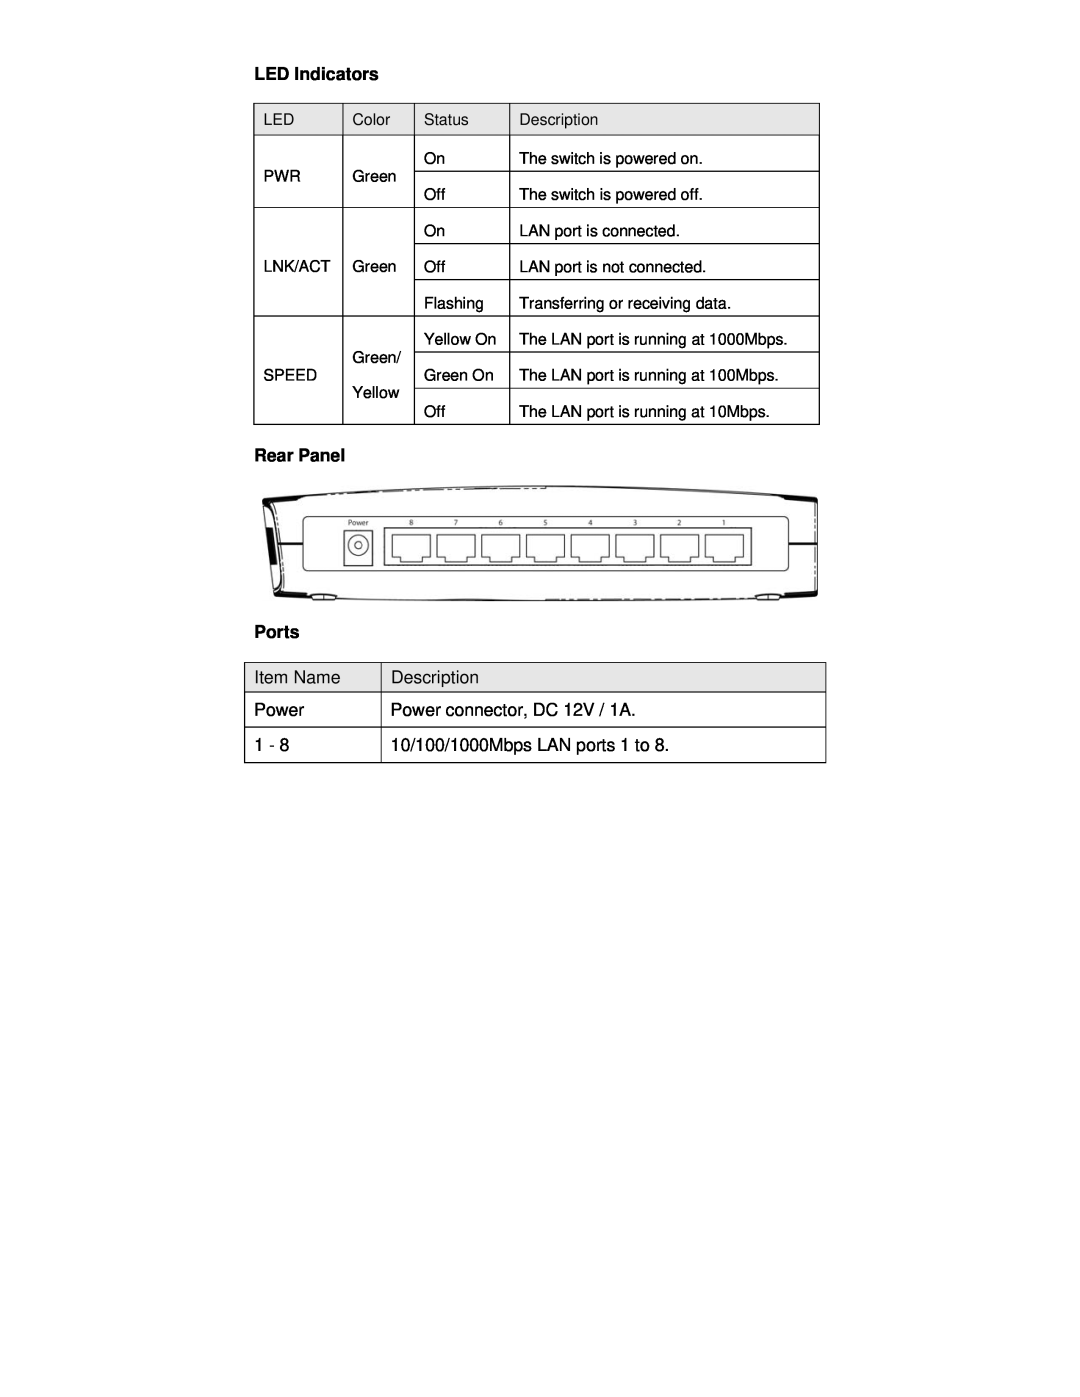 Airlink101 AGSW801 manual LED Indicators, Rear Panel Ports, Item Name, Description, Power connector, DC 12V / 1A 